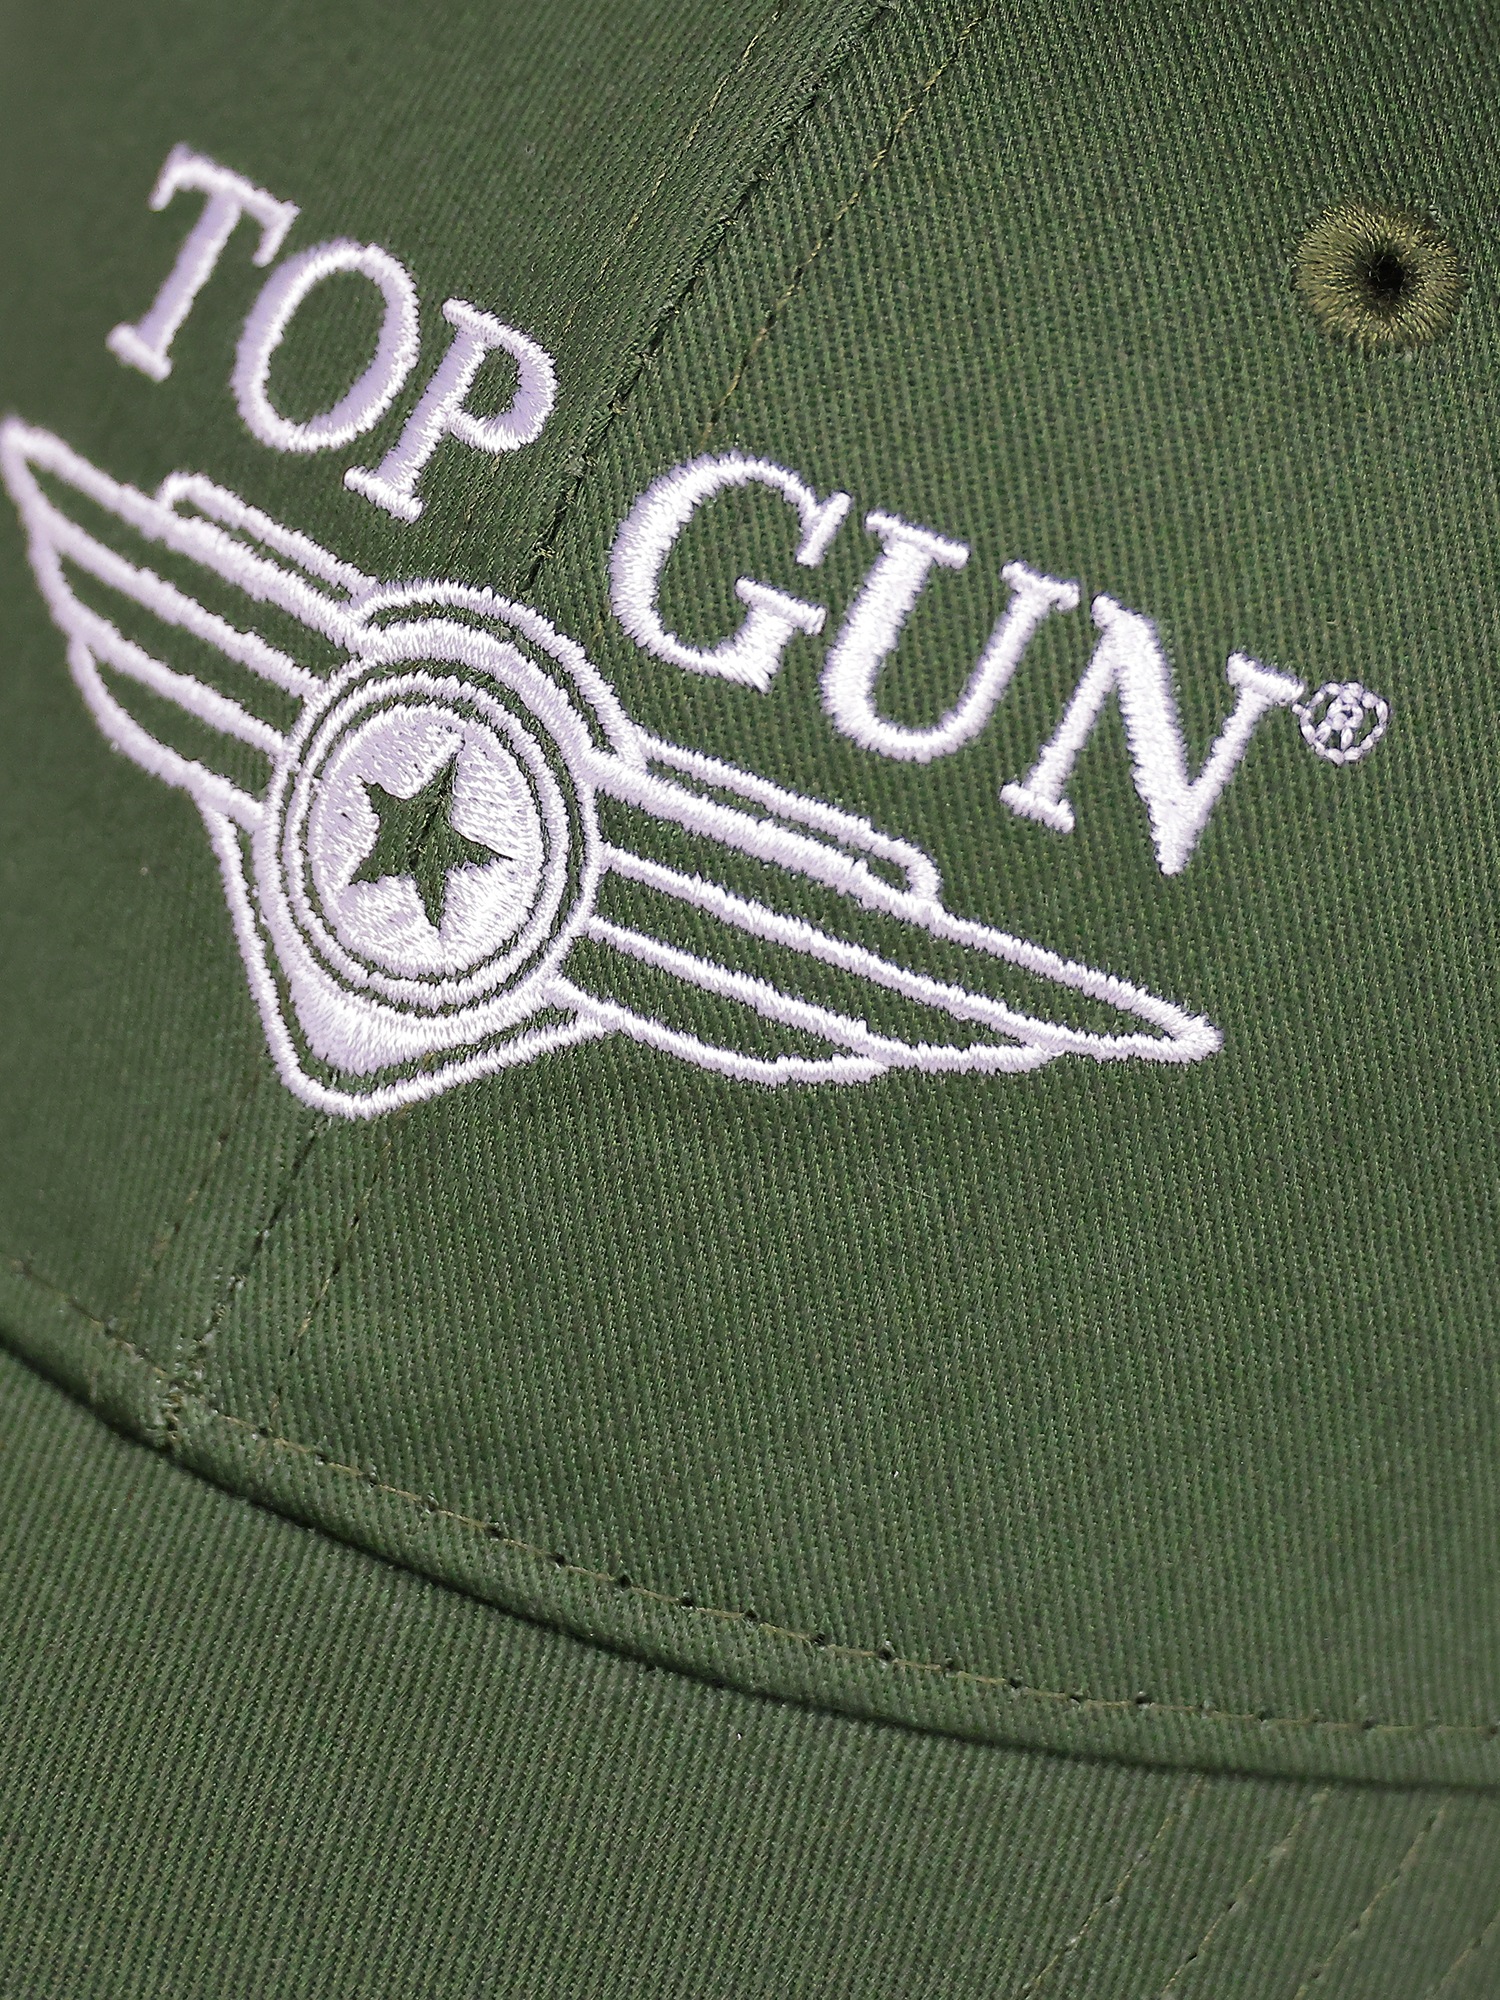 TOP GUN Snapback Cap »TG22013«